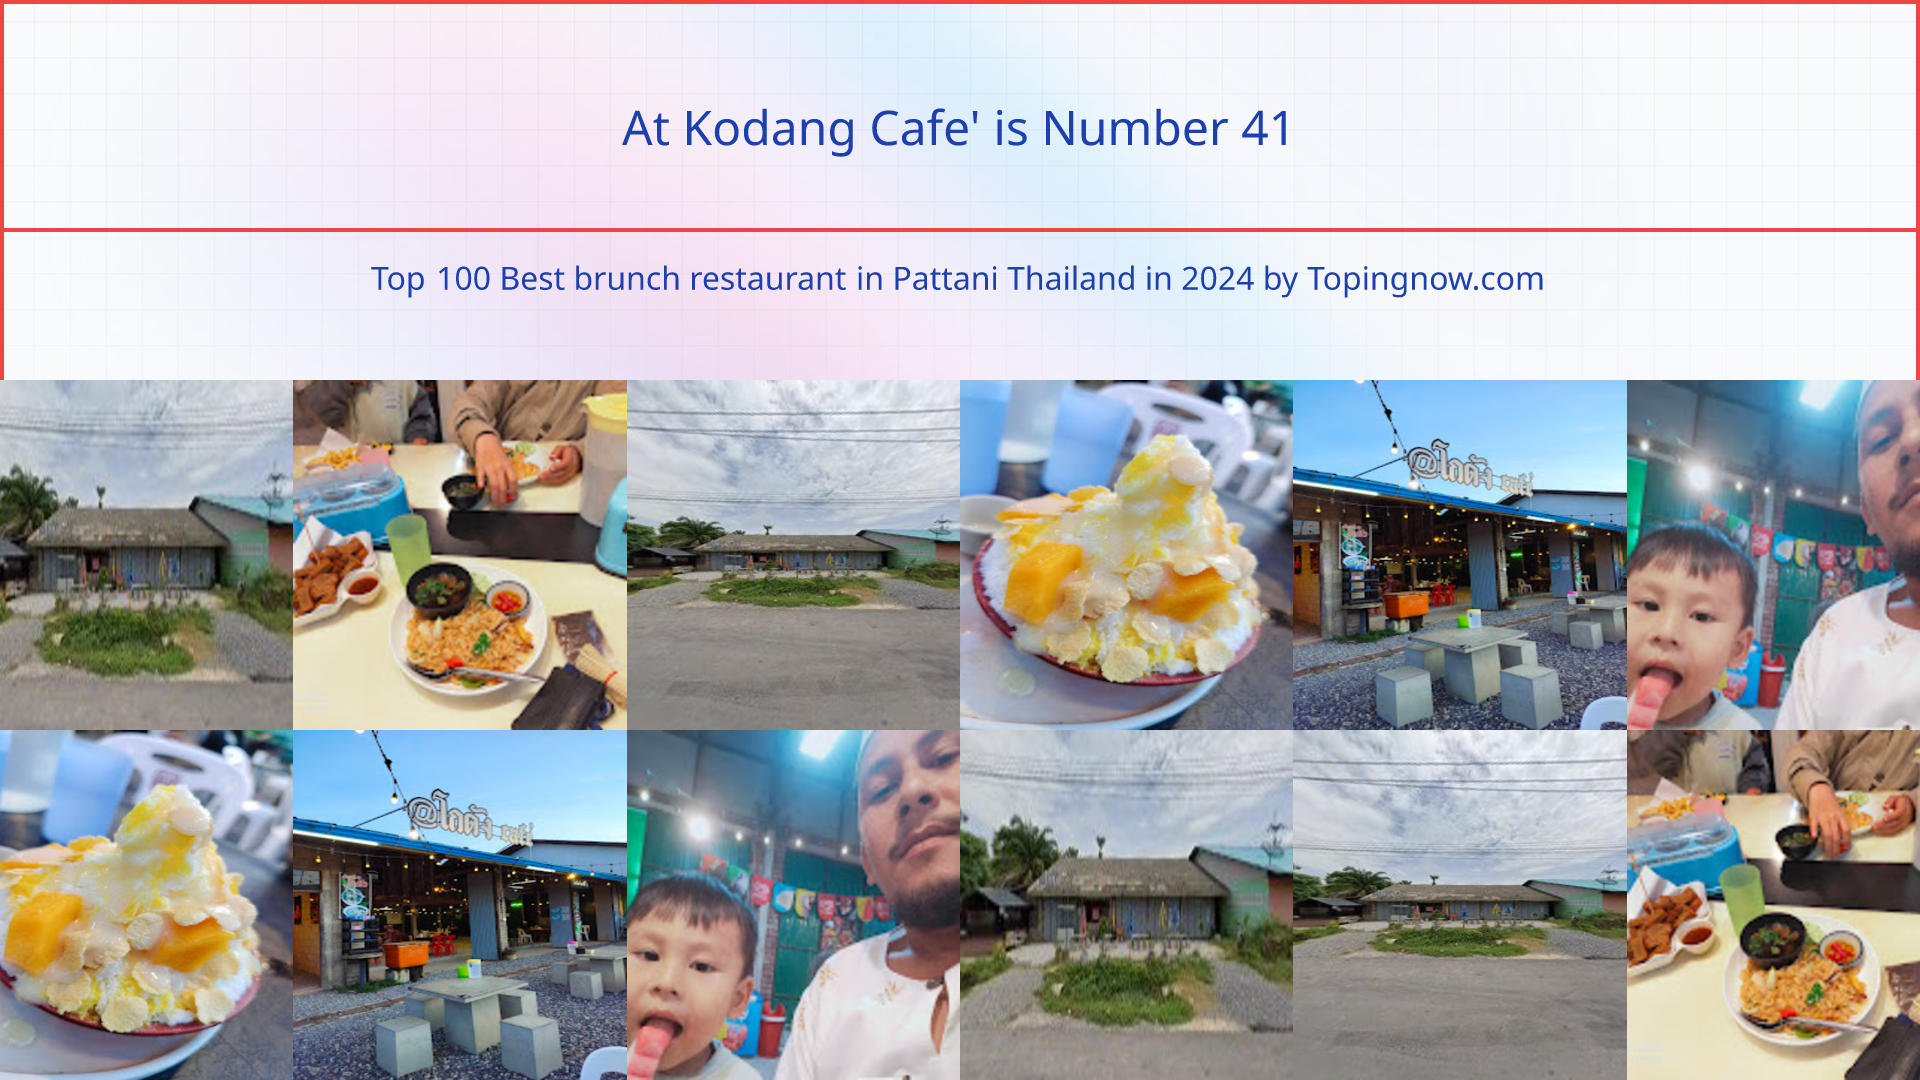 At Kodang Cafe': Top 100 Best brunch restaurant in Pattani Thailand in 2024